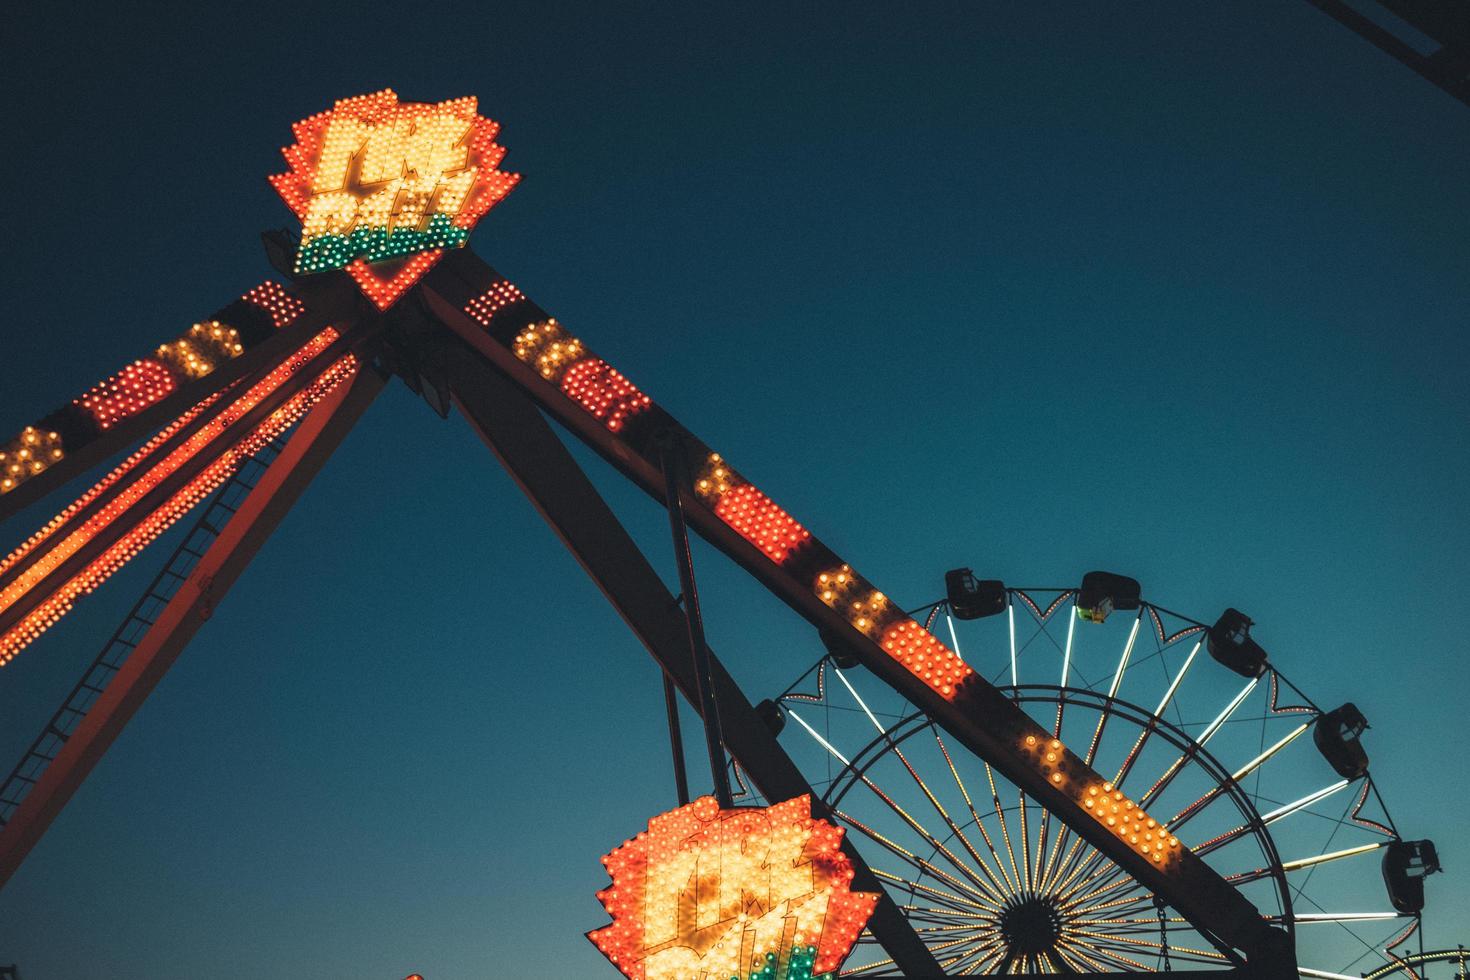 Los Angeles, California, 2020 - Fair ride at dusk photo